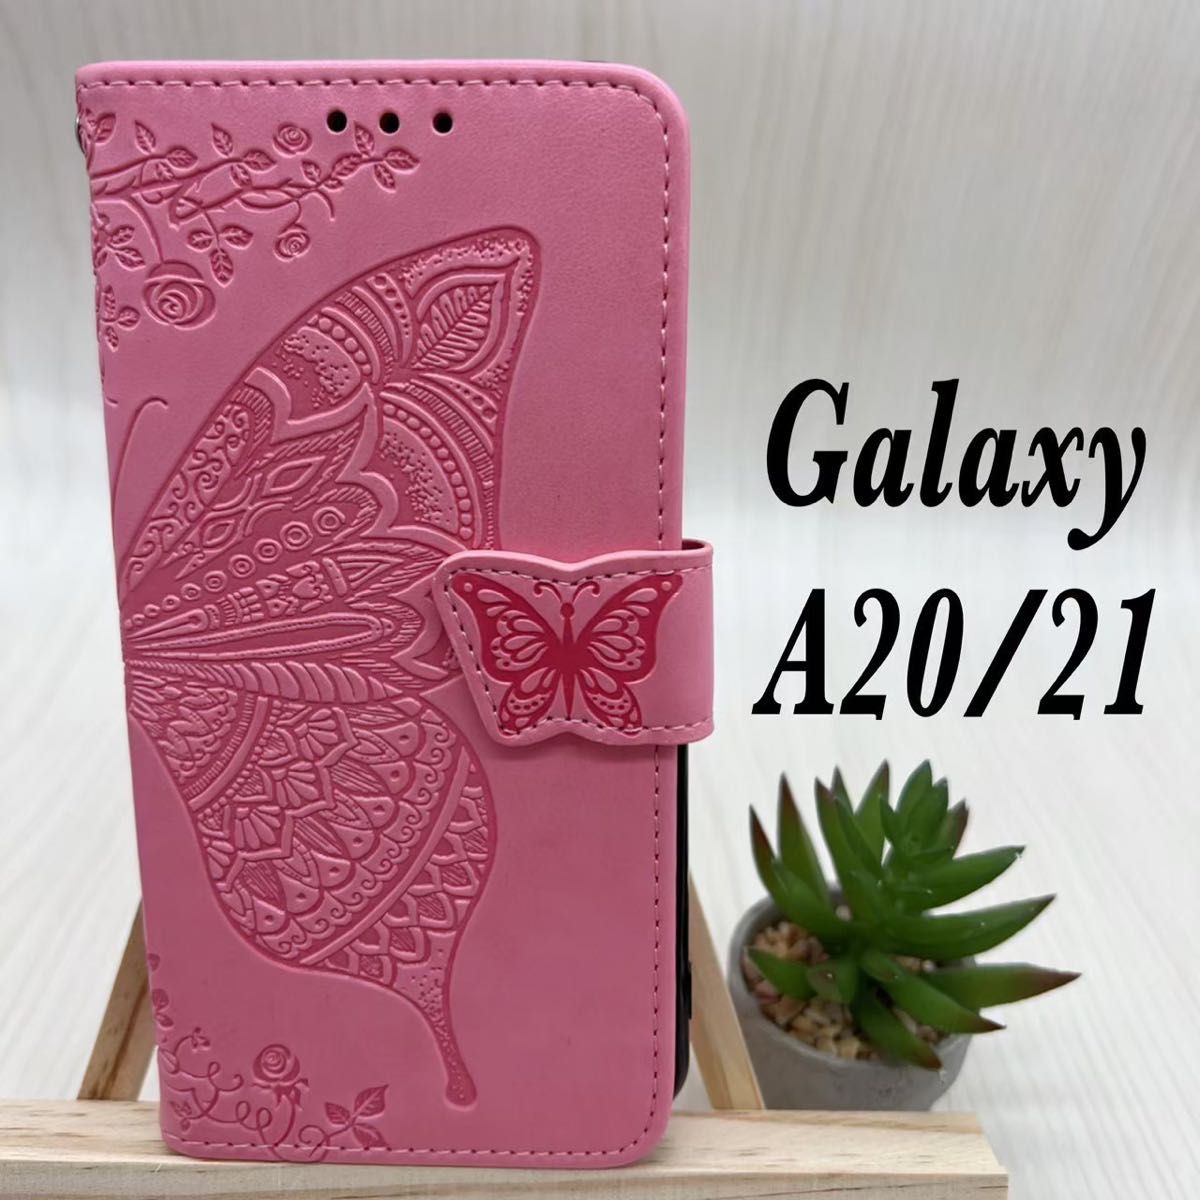 Galaxy A20 A21 ピンク エンボス フラワー 手帳 ギャラクシー